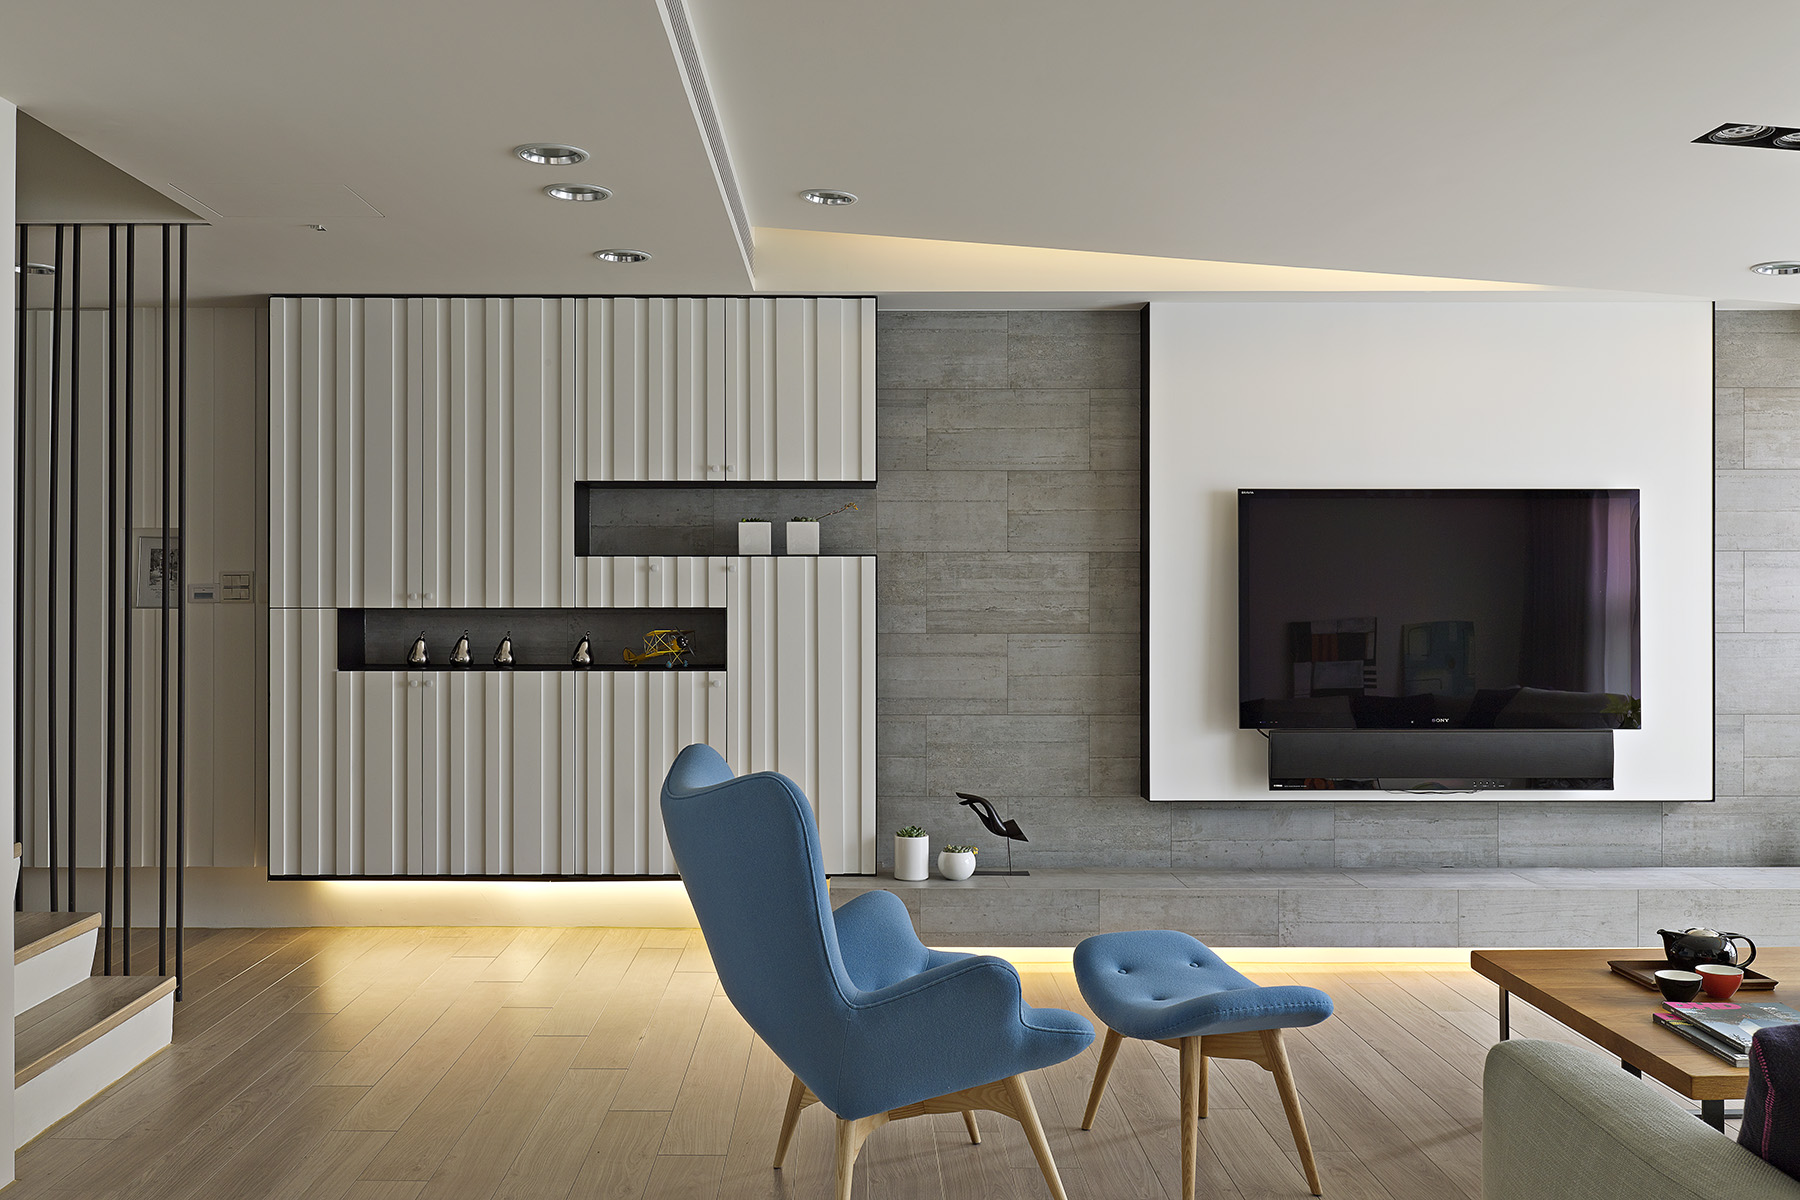 https://www.home-designing.com/wp-content/uploads/2015/04/Modern-Living-Room.jpg